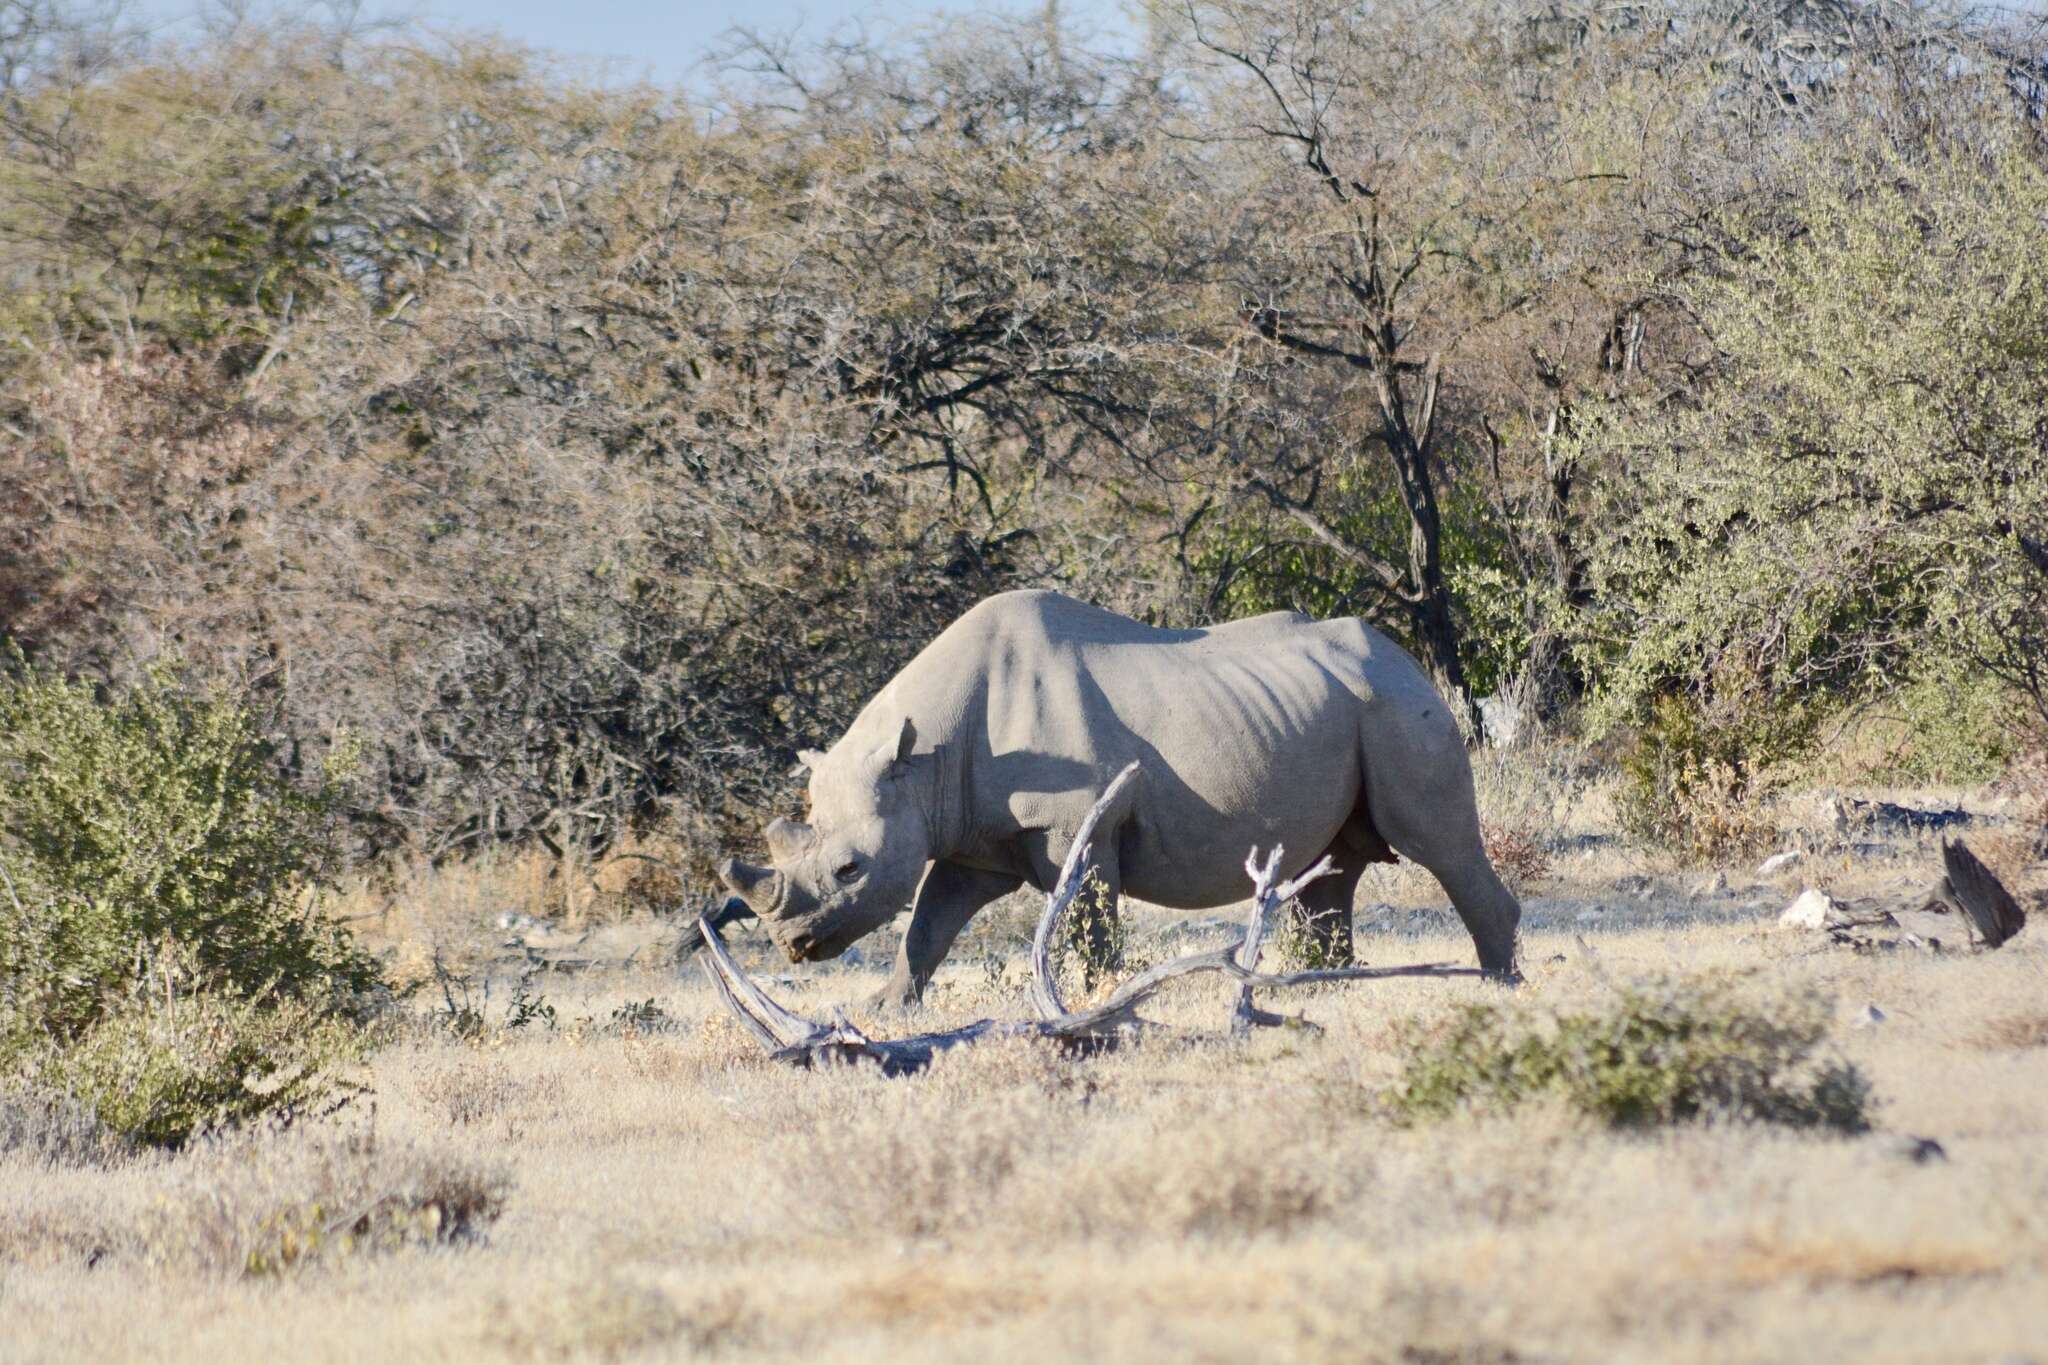 Image of Cape rhinoceros